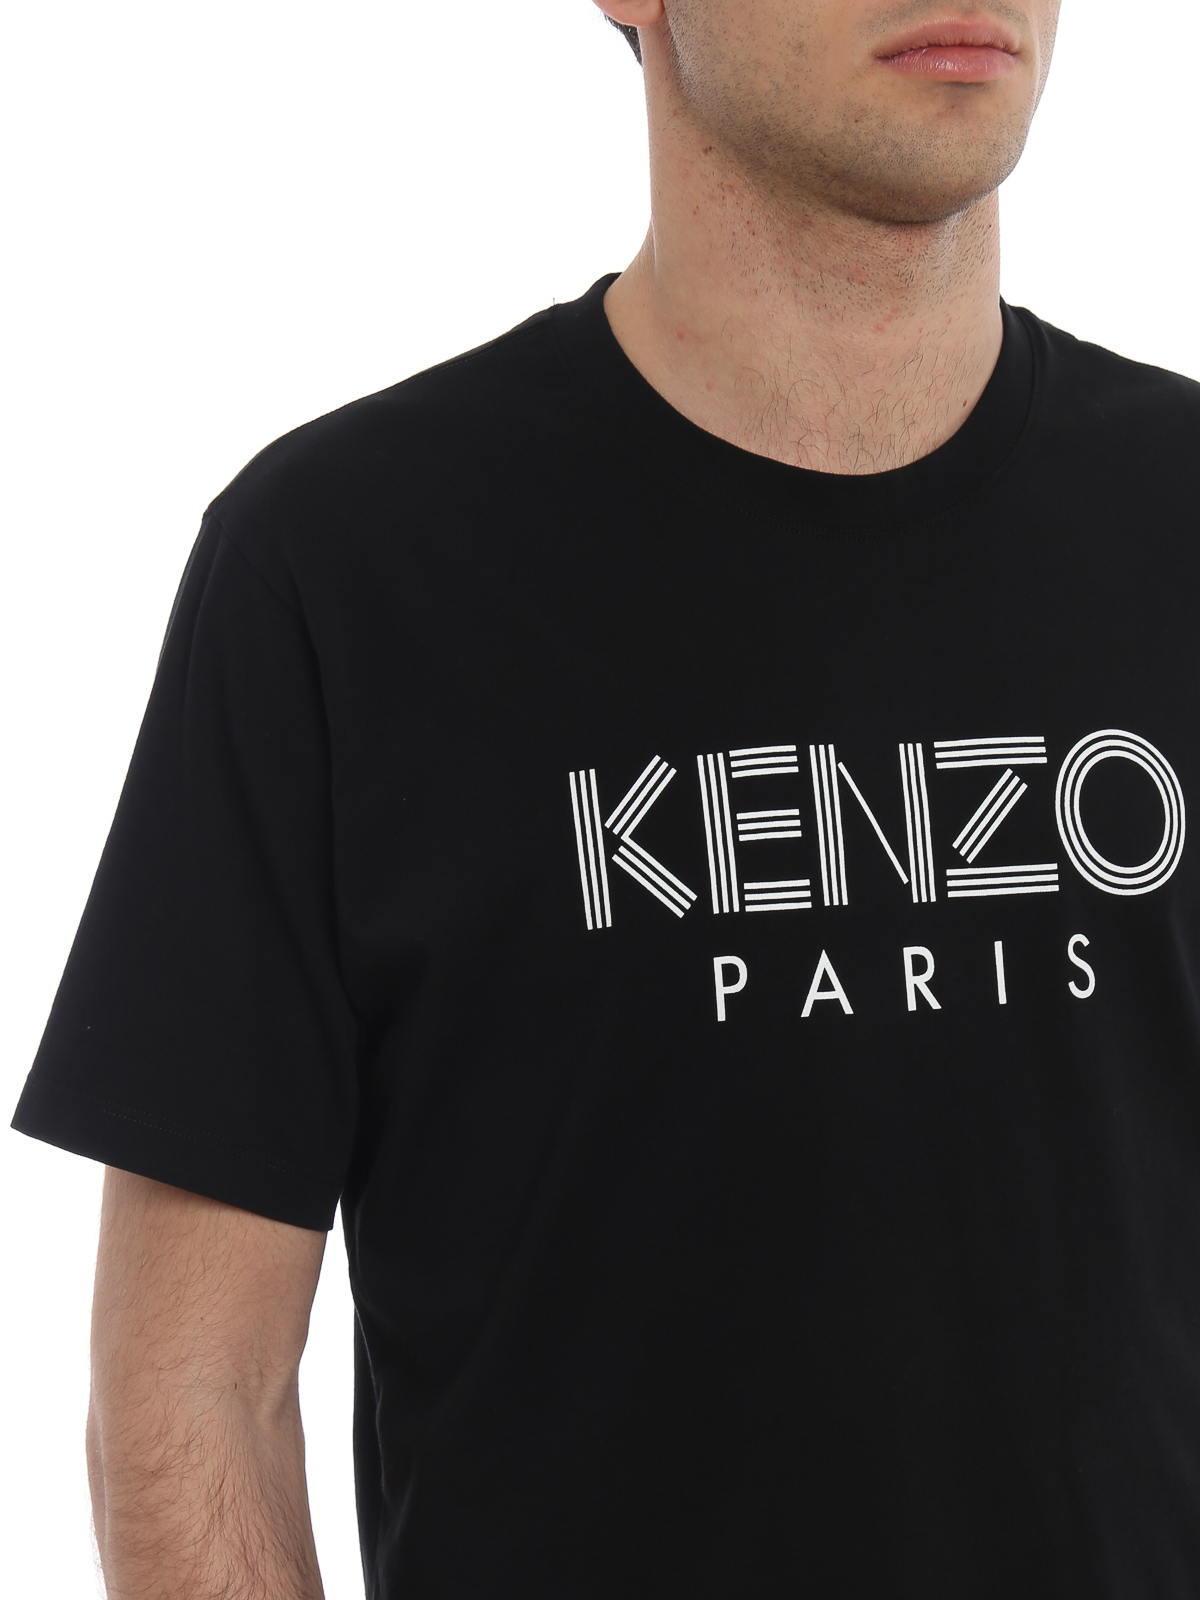 Politieagent Dempsey Trots Tシャツ Kenzo - Tシャツ - Kenzo Paris - F005TS0924SG99 | iKRIX.com